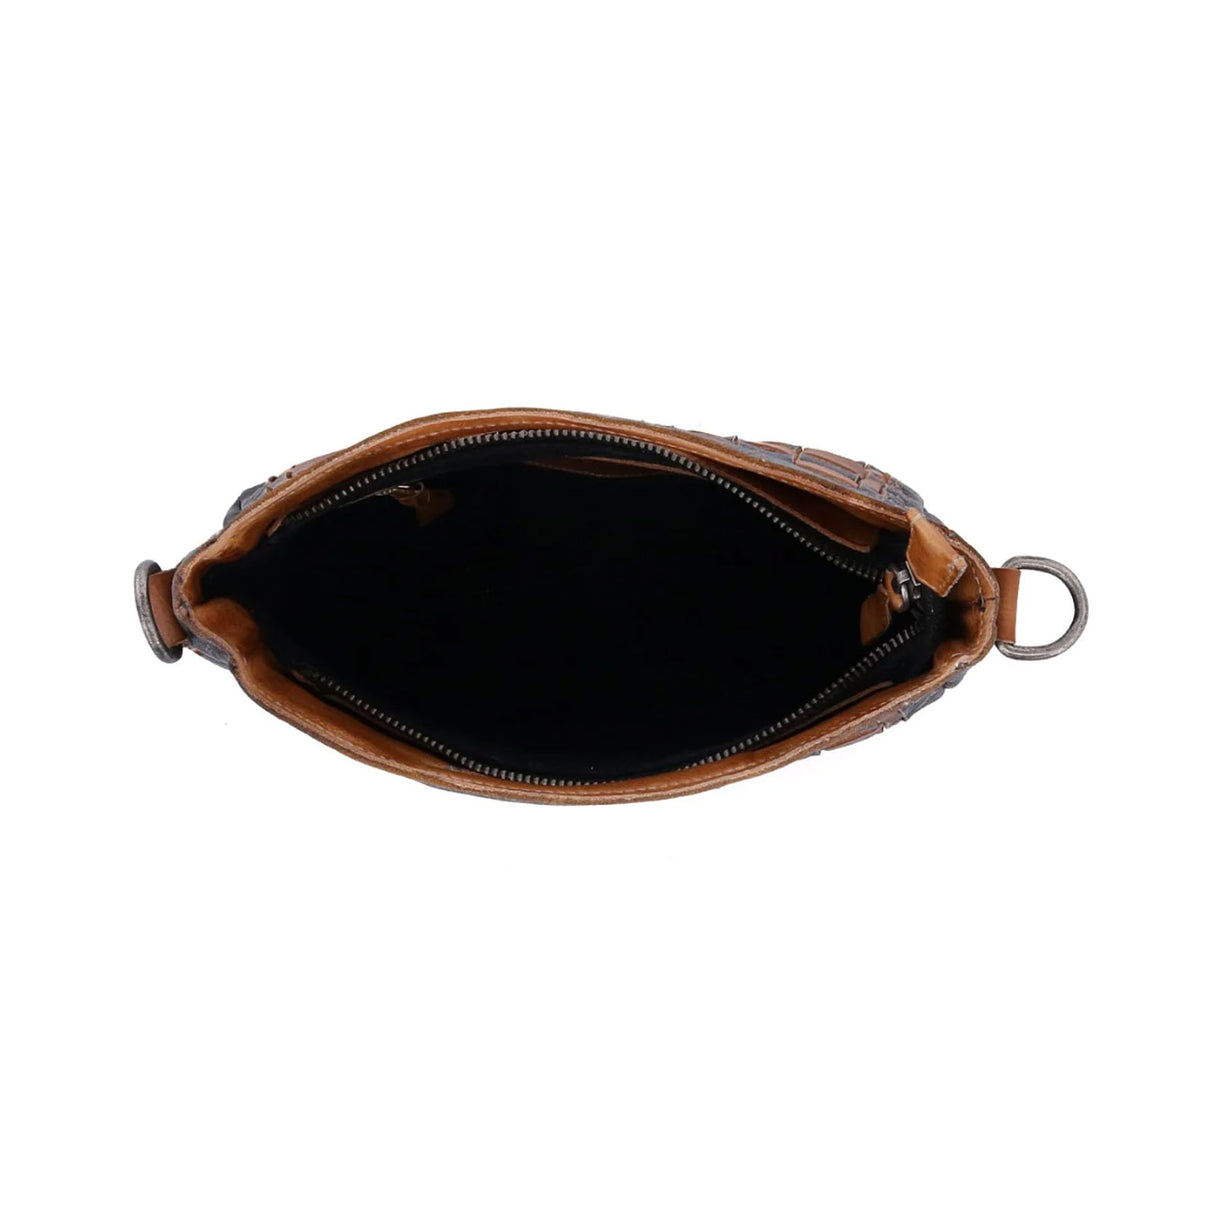 Bed Stu Keiki Crossbody Bag - Black Lux Tan Rustic Accessories - Bags - Crossbody - The Heel Shoe Fitters